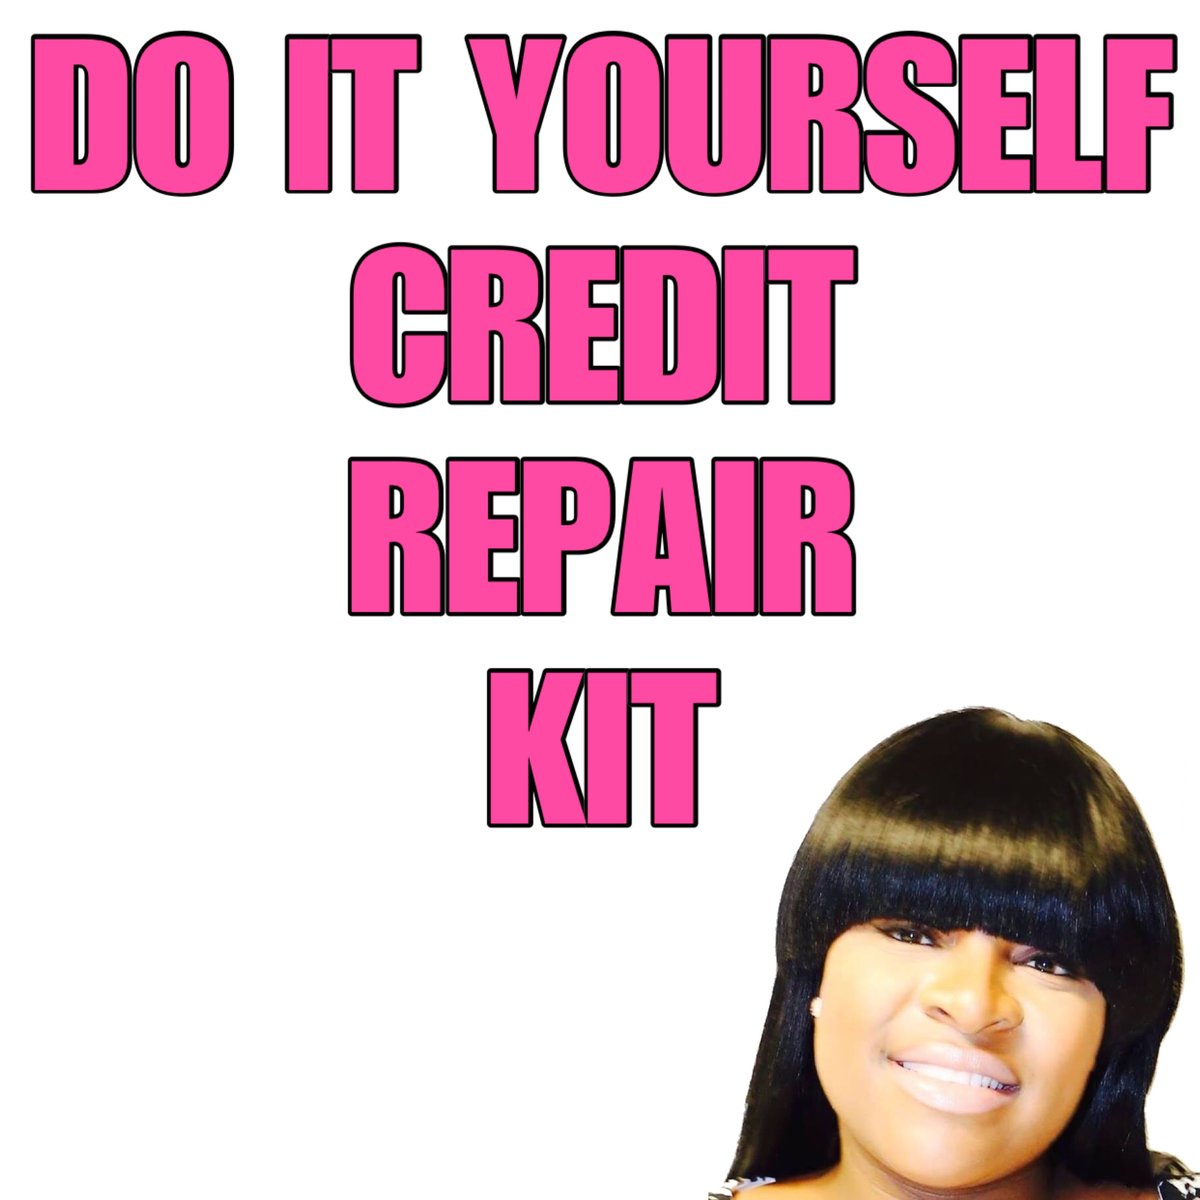 Image of Do It Yourself Credit Repair Kit